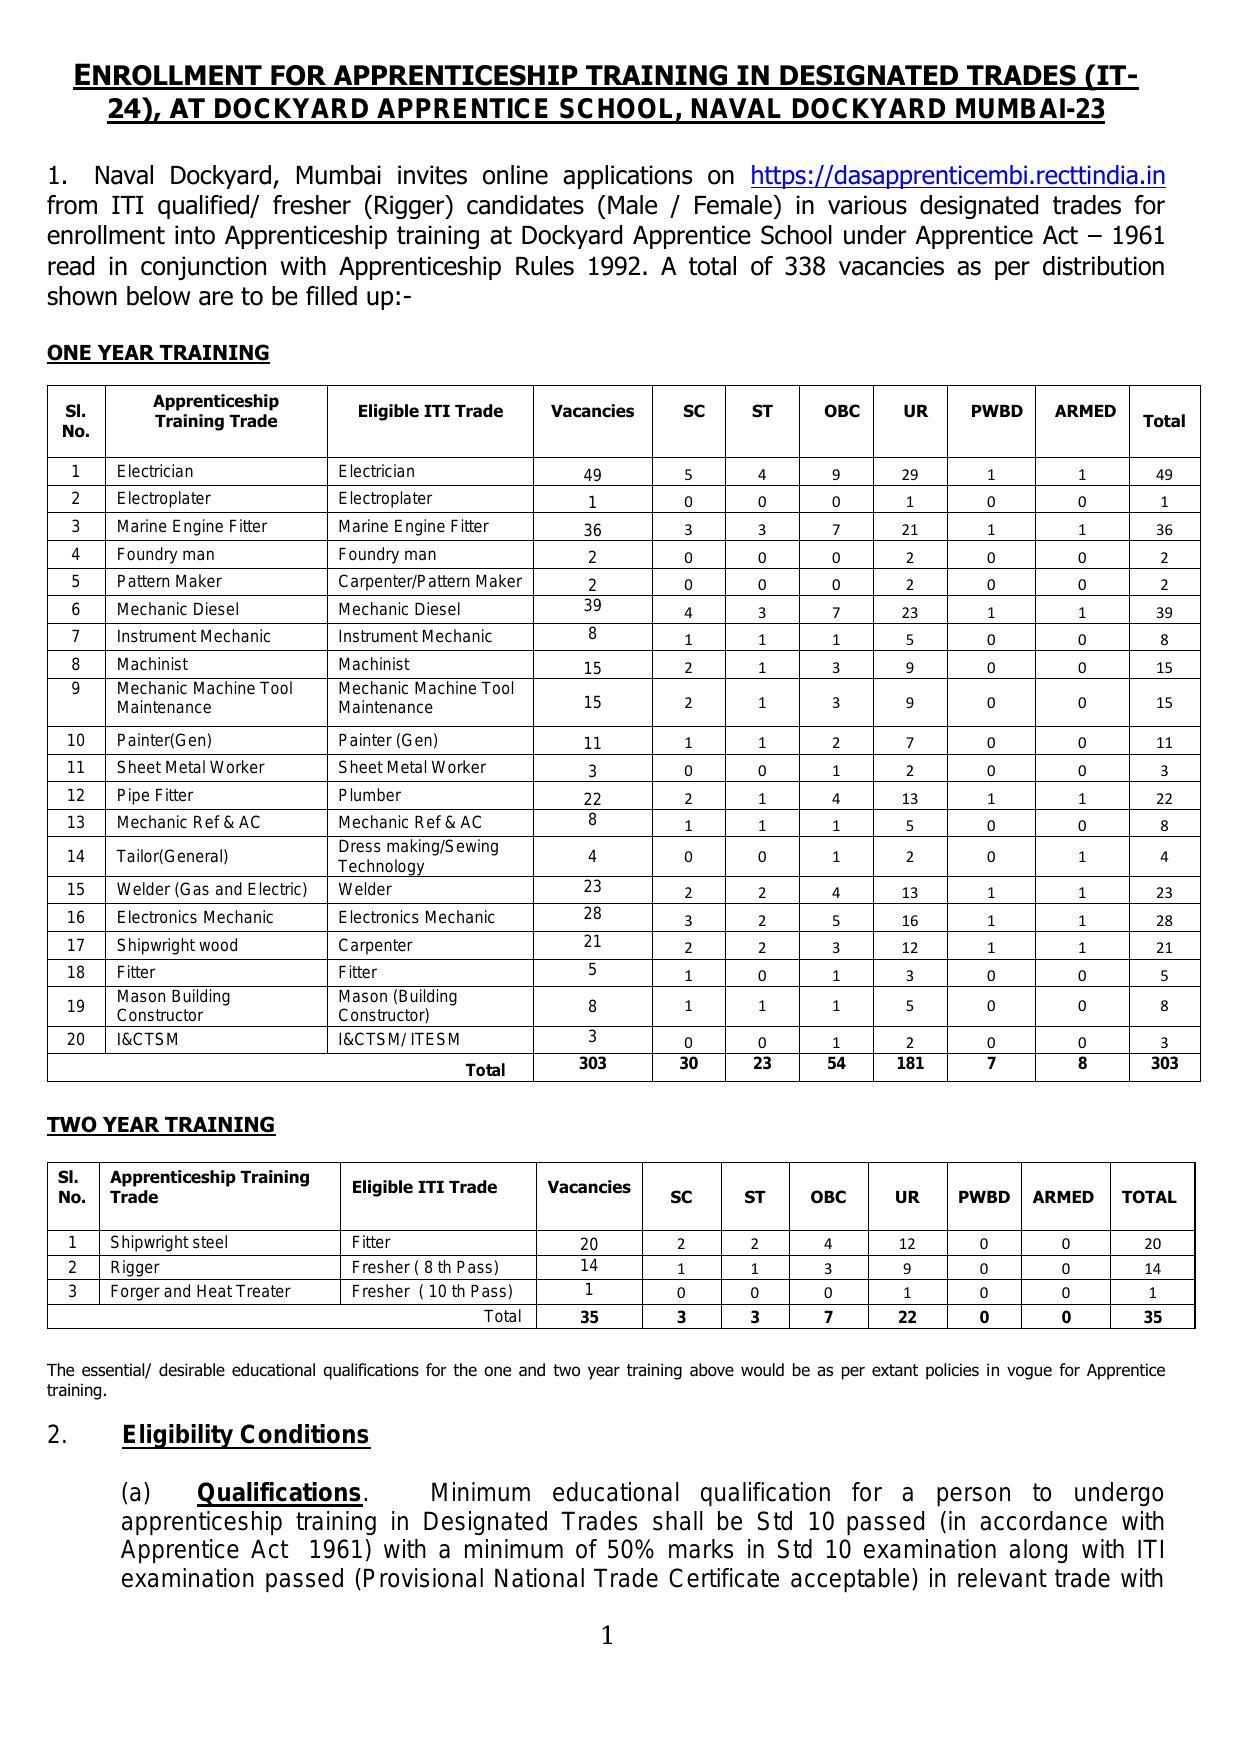 Naval Dockyard Mumbai Trade Apprentice Recruitment 2022 - Page 2